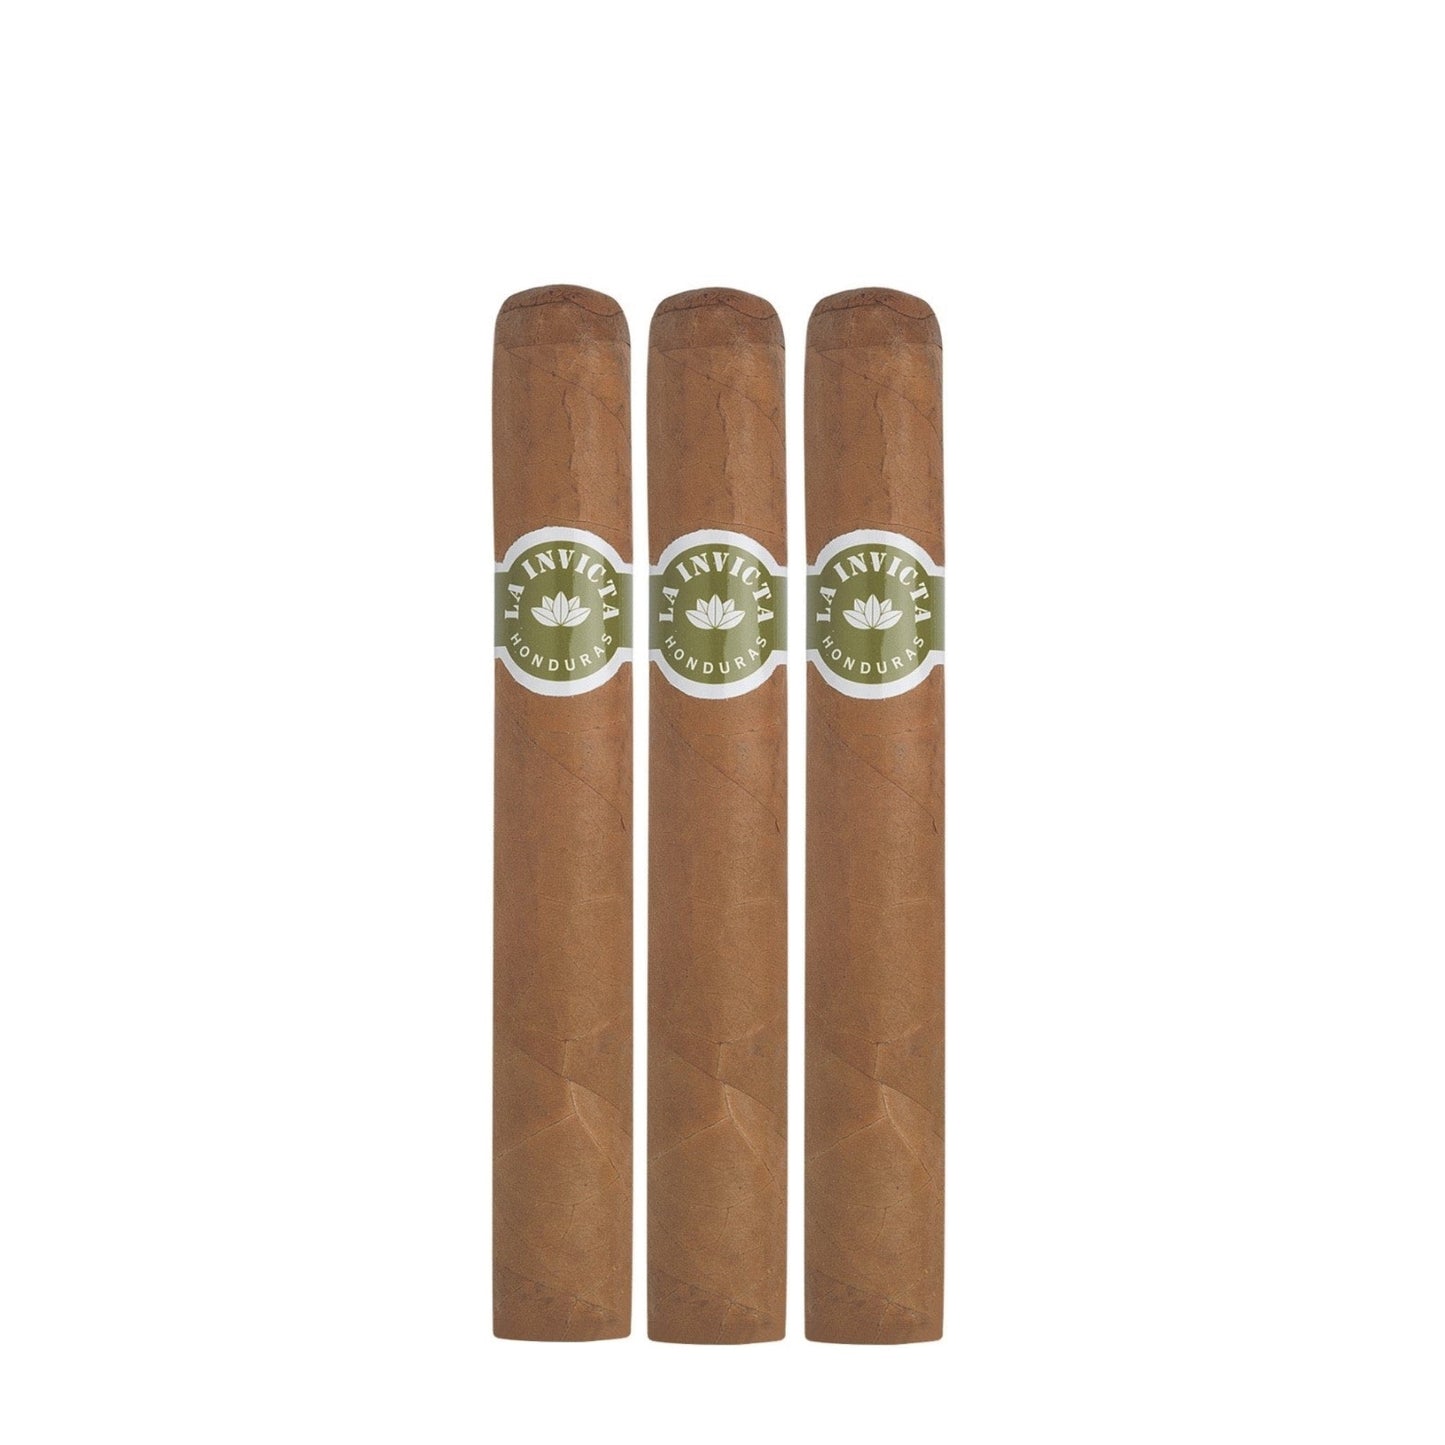 La Invicta Honduran Corona - Cigars to share